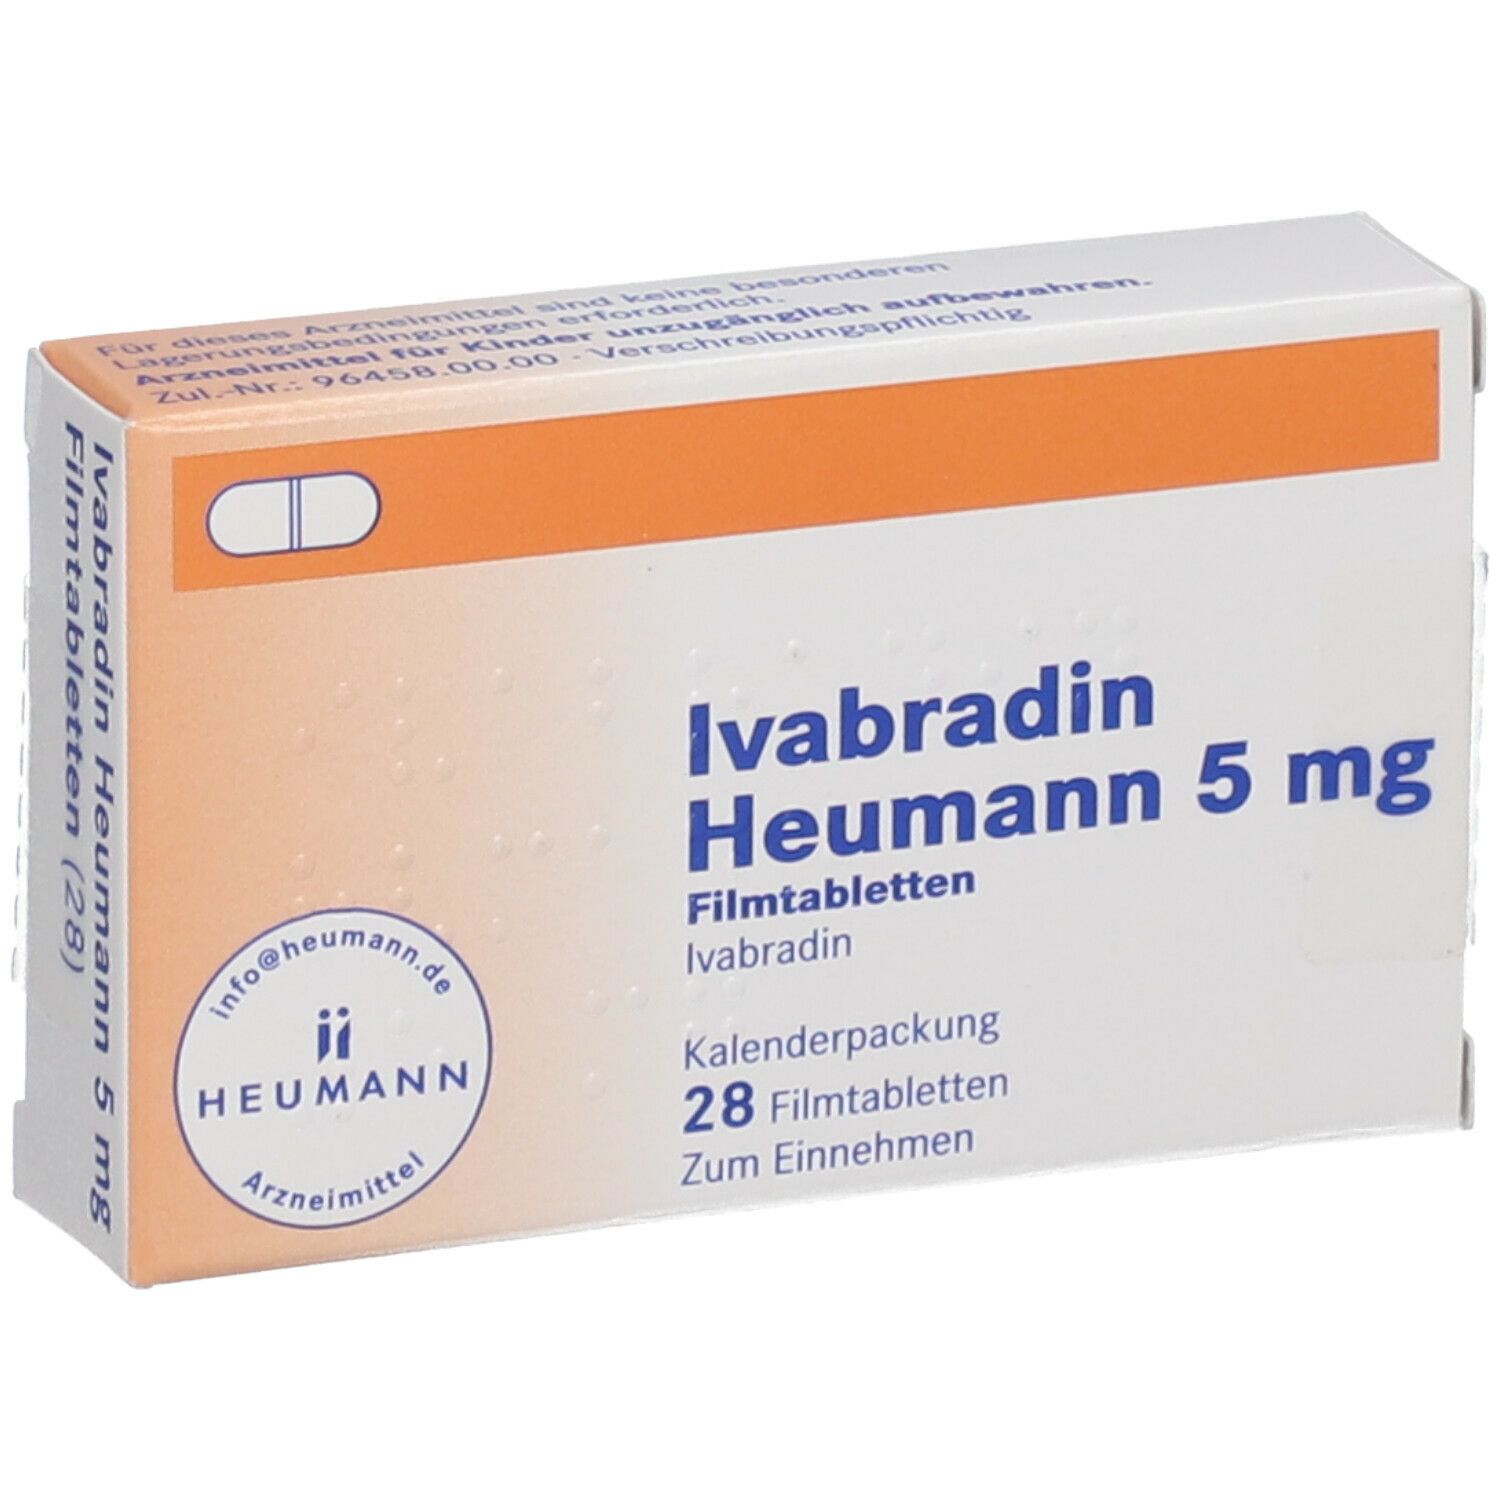 Ivabradin Heumann 5 mg